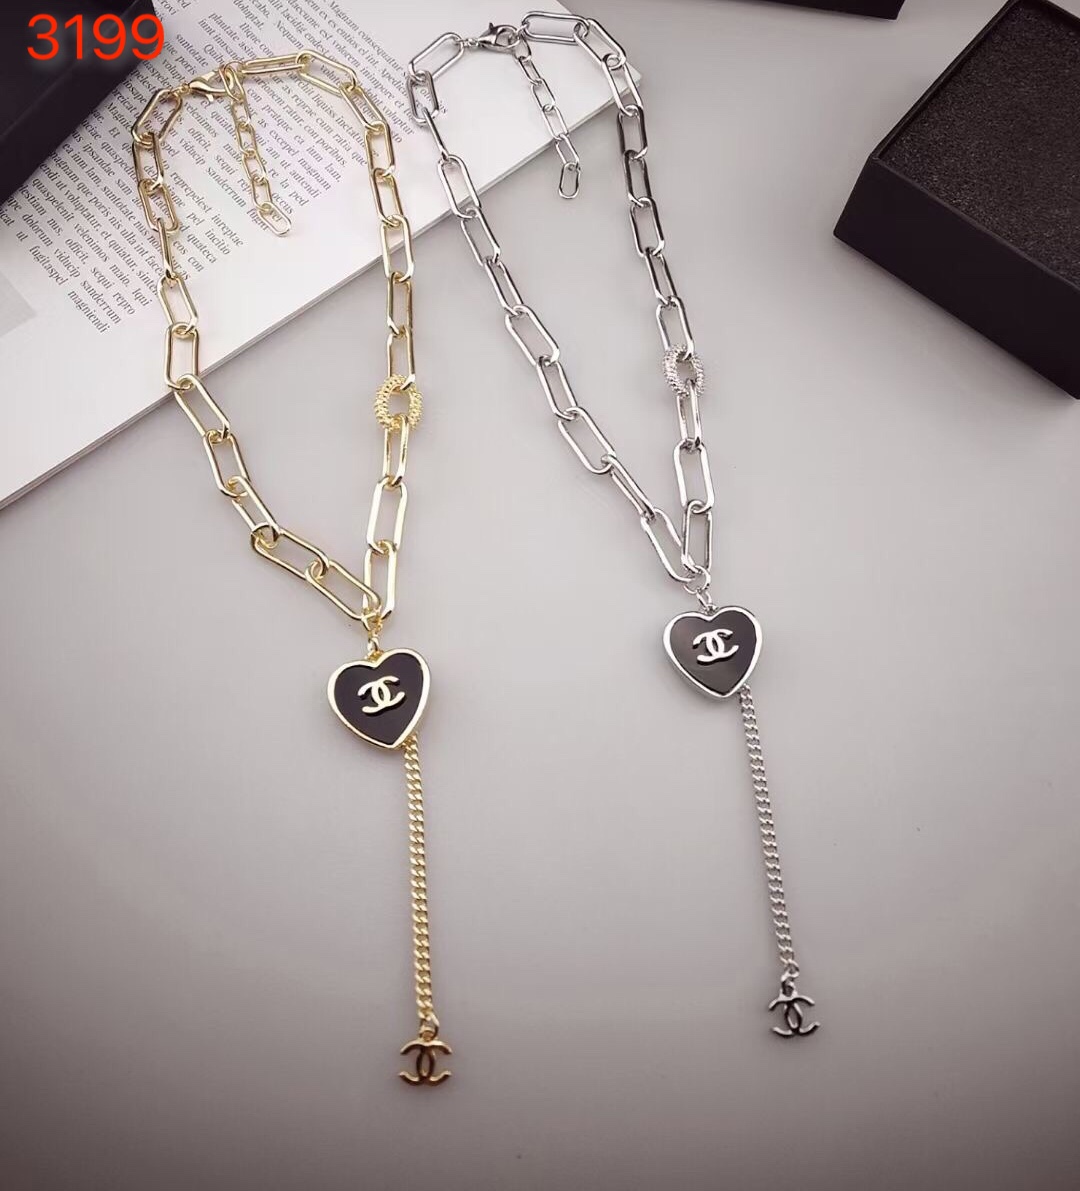 Chanel necklace fashion jewelry 108618